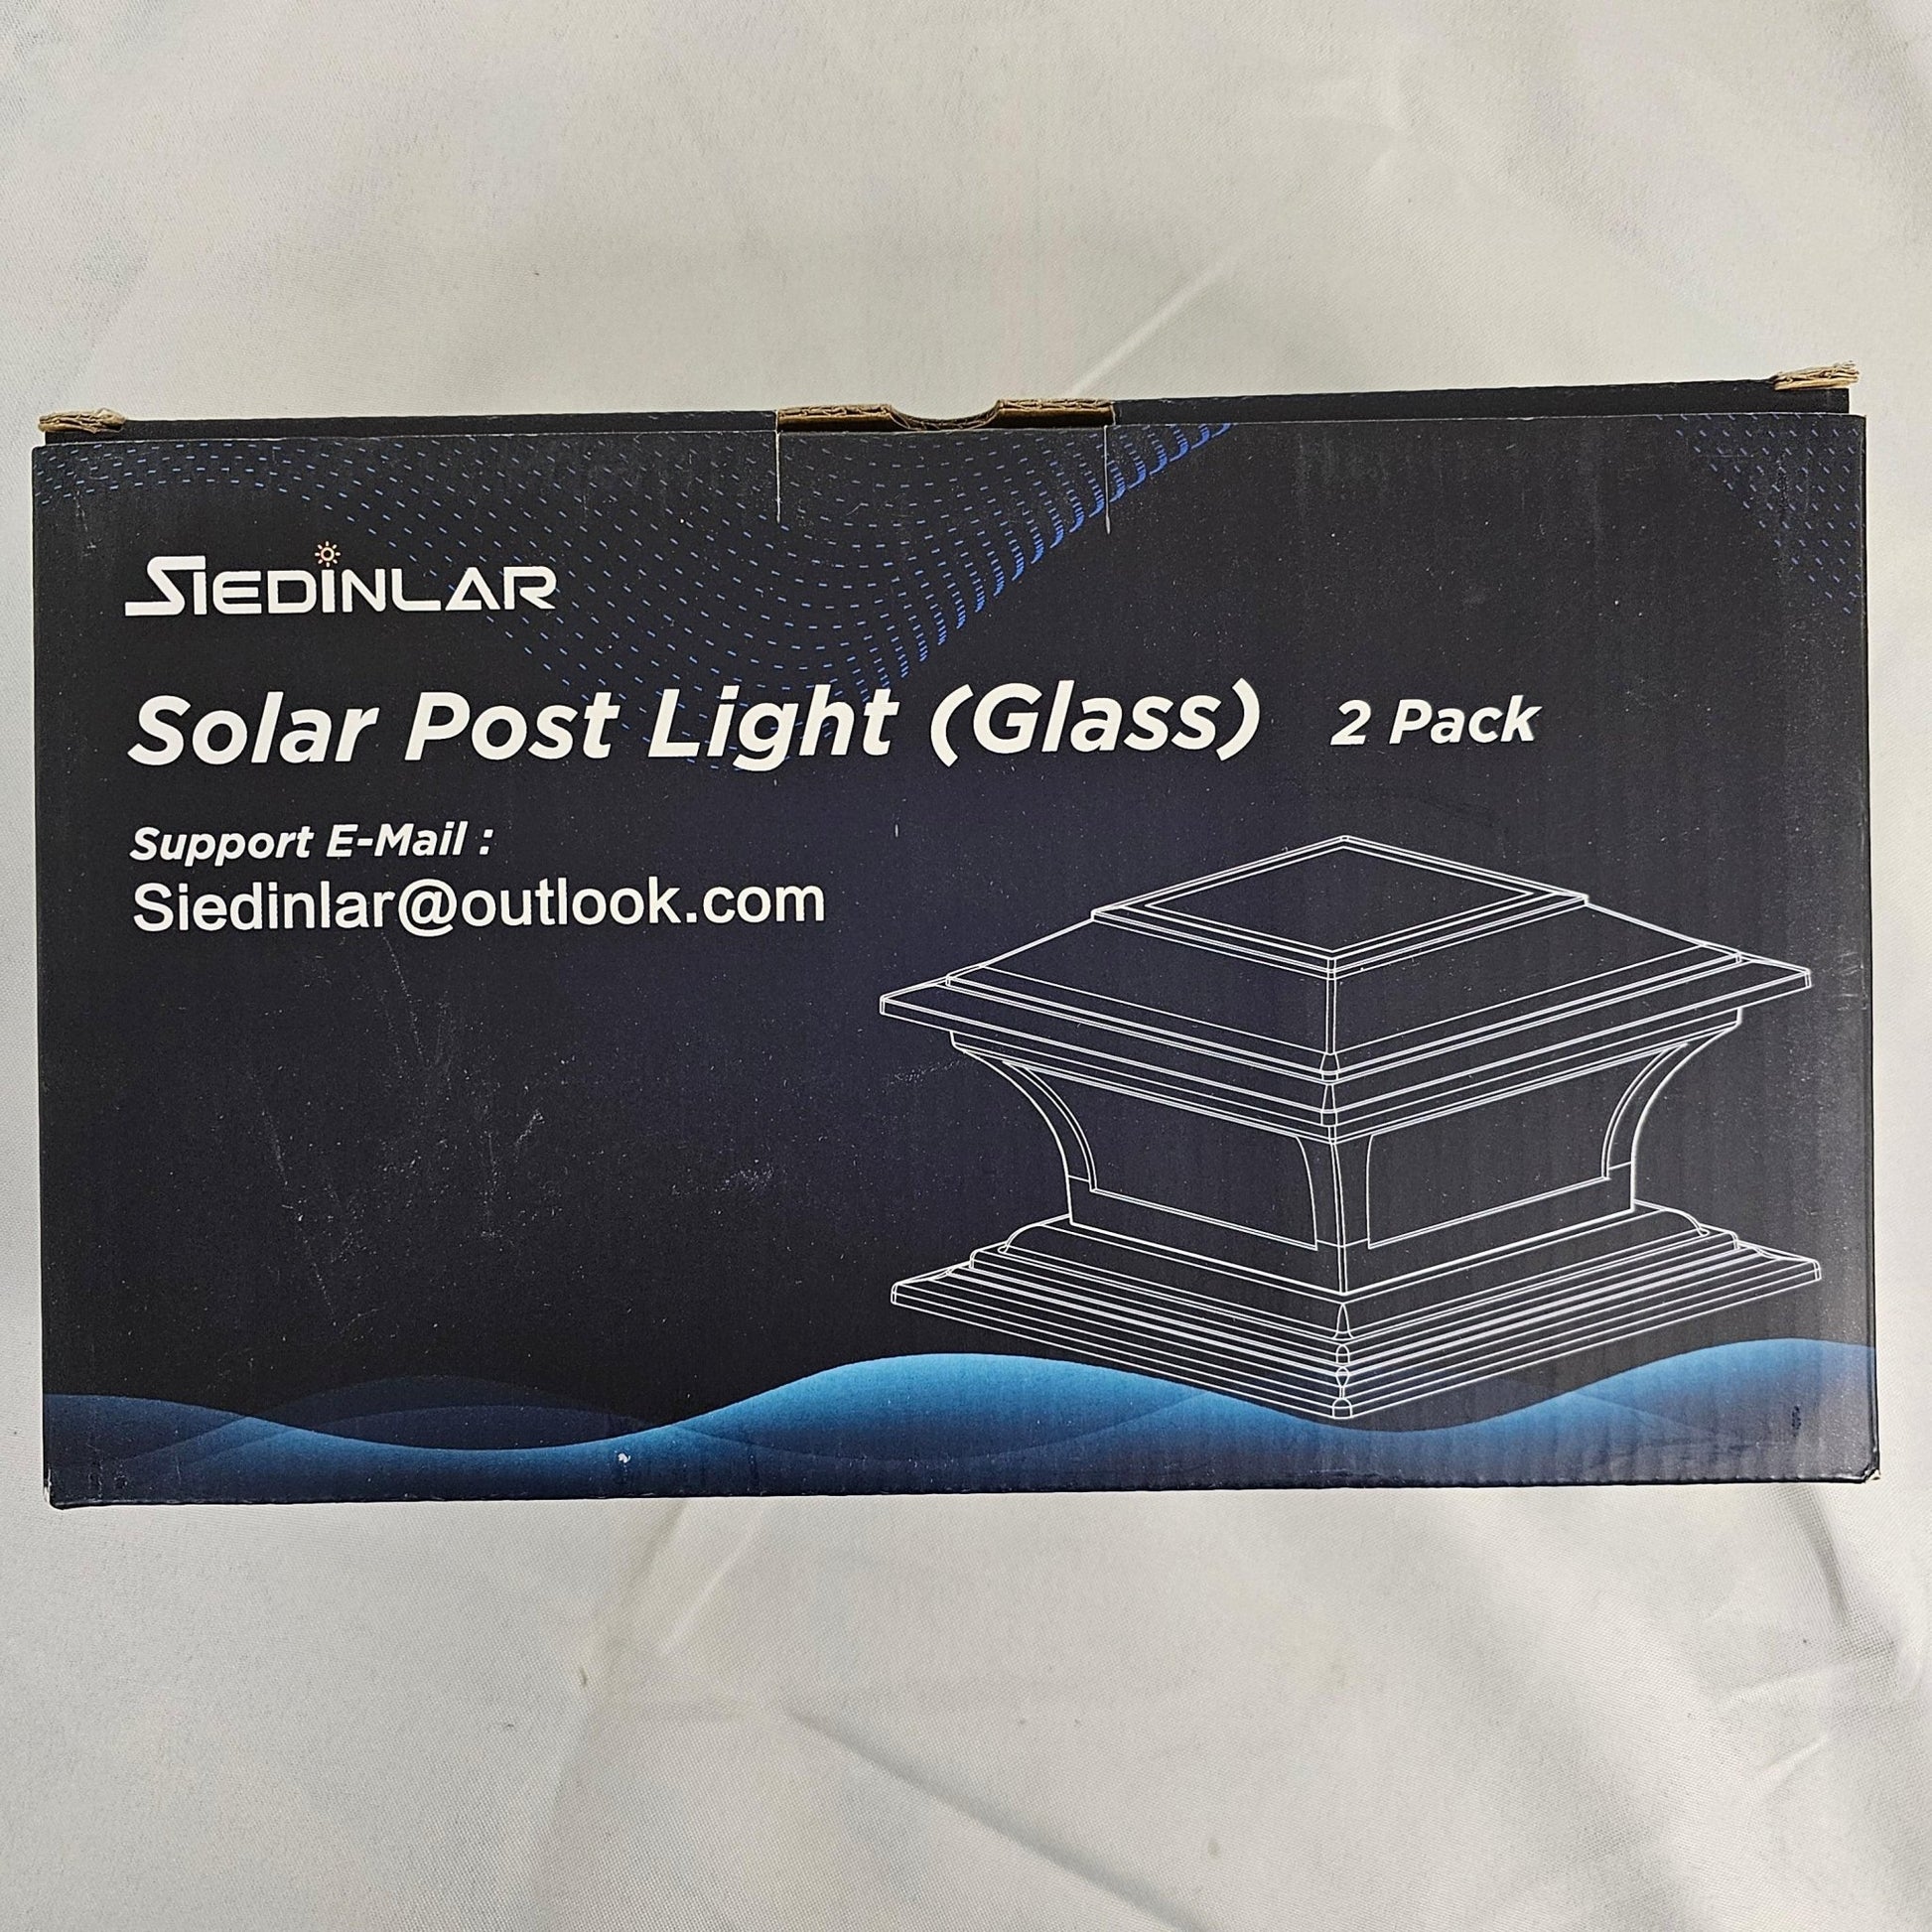 Solar Post Light (Glass) 2 Pack Siedinlar - DQ Distribution